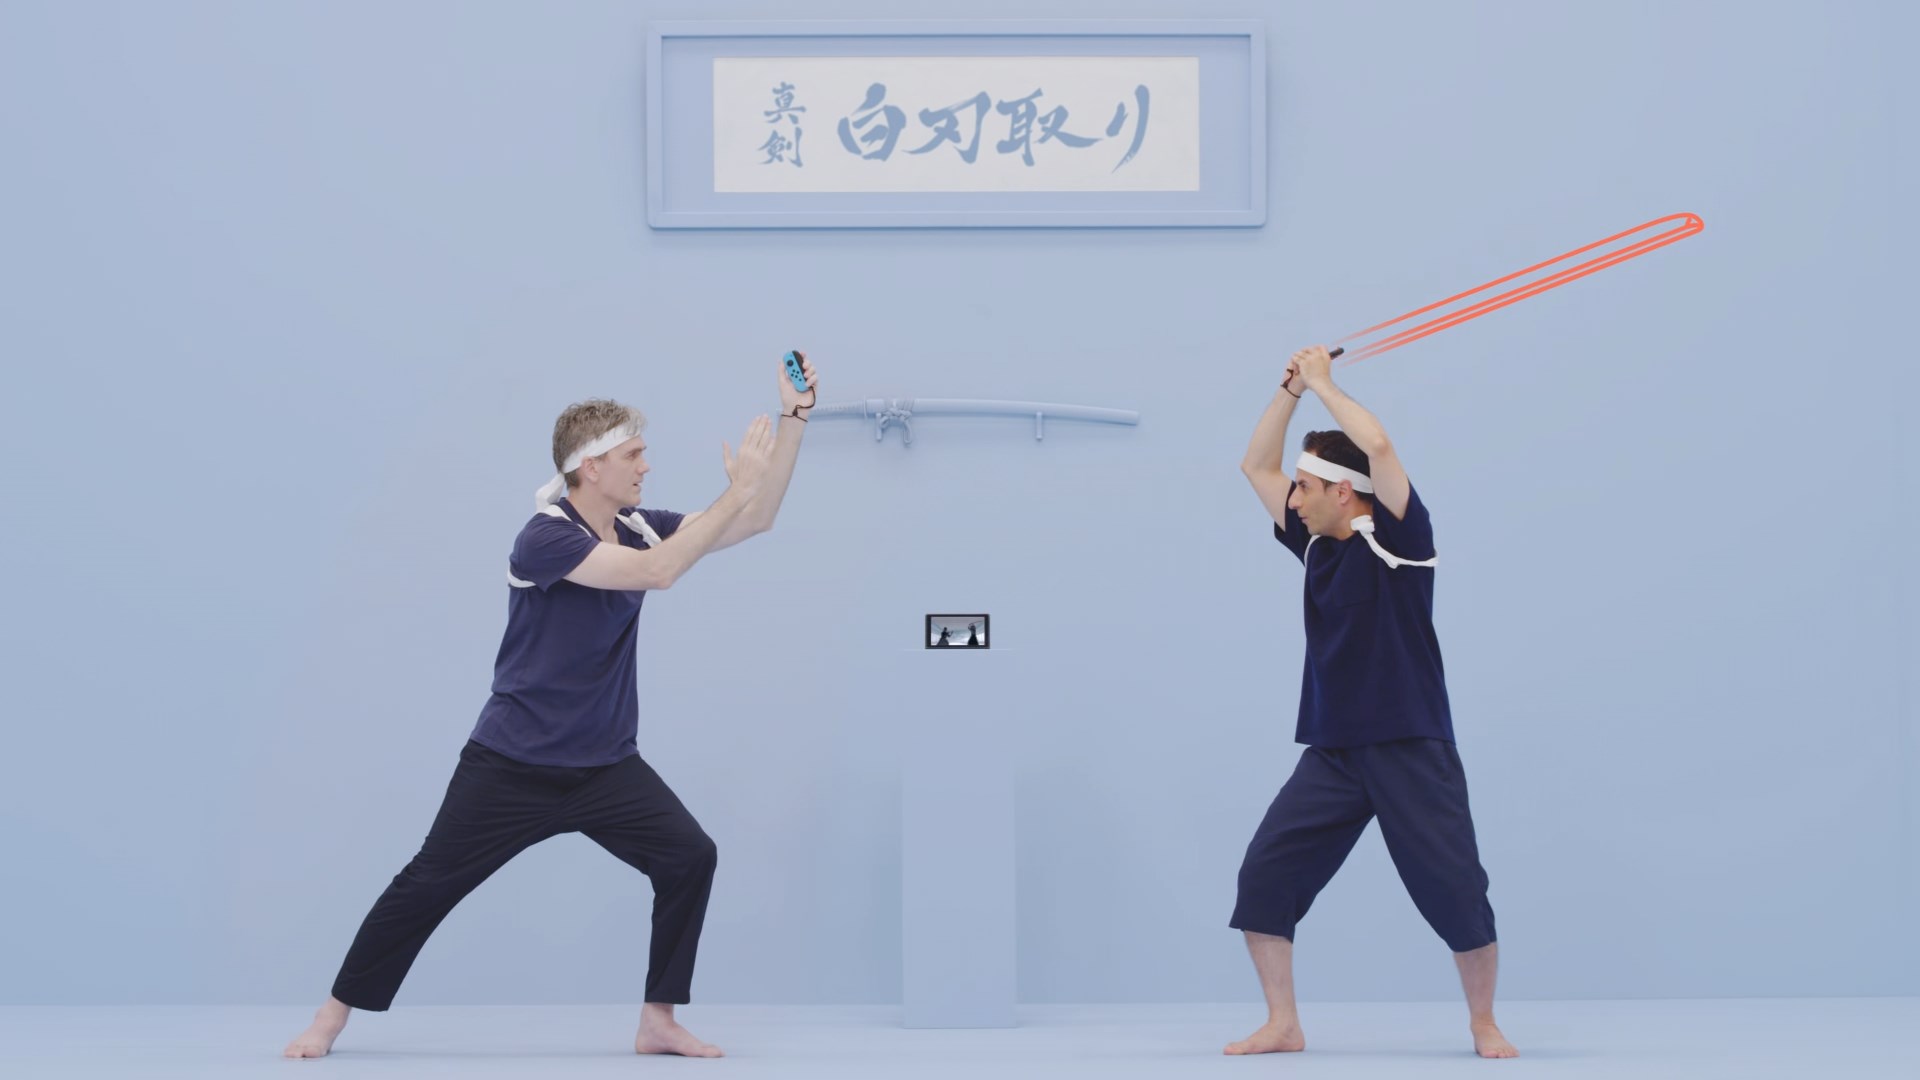 1-2-Switch samurai training